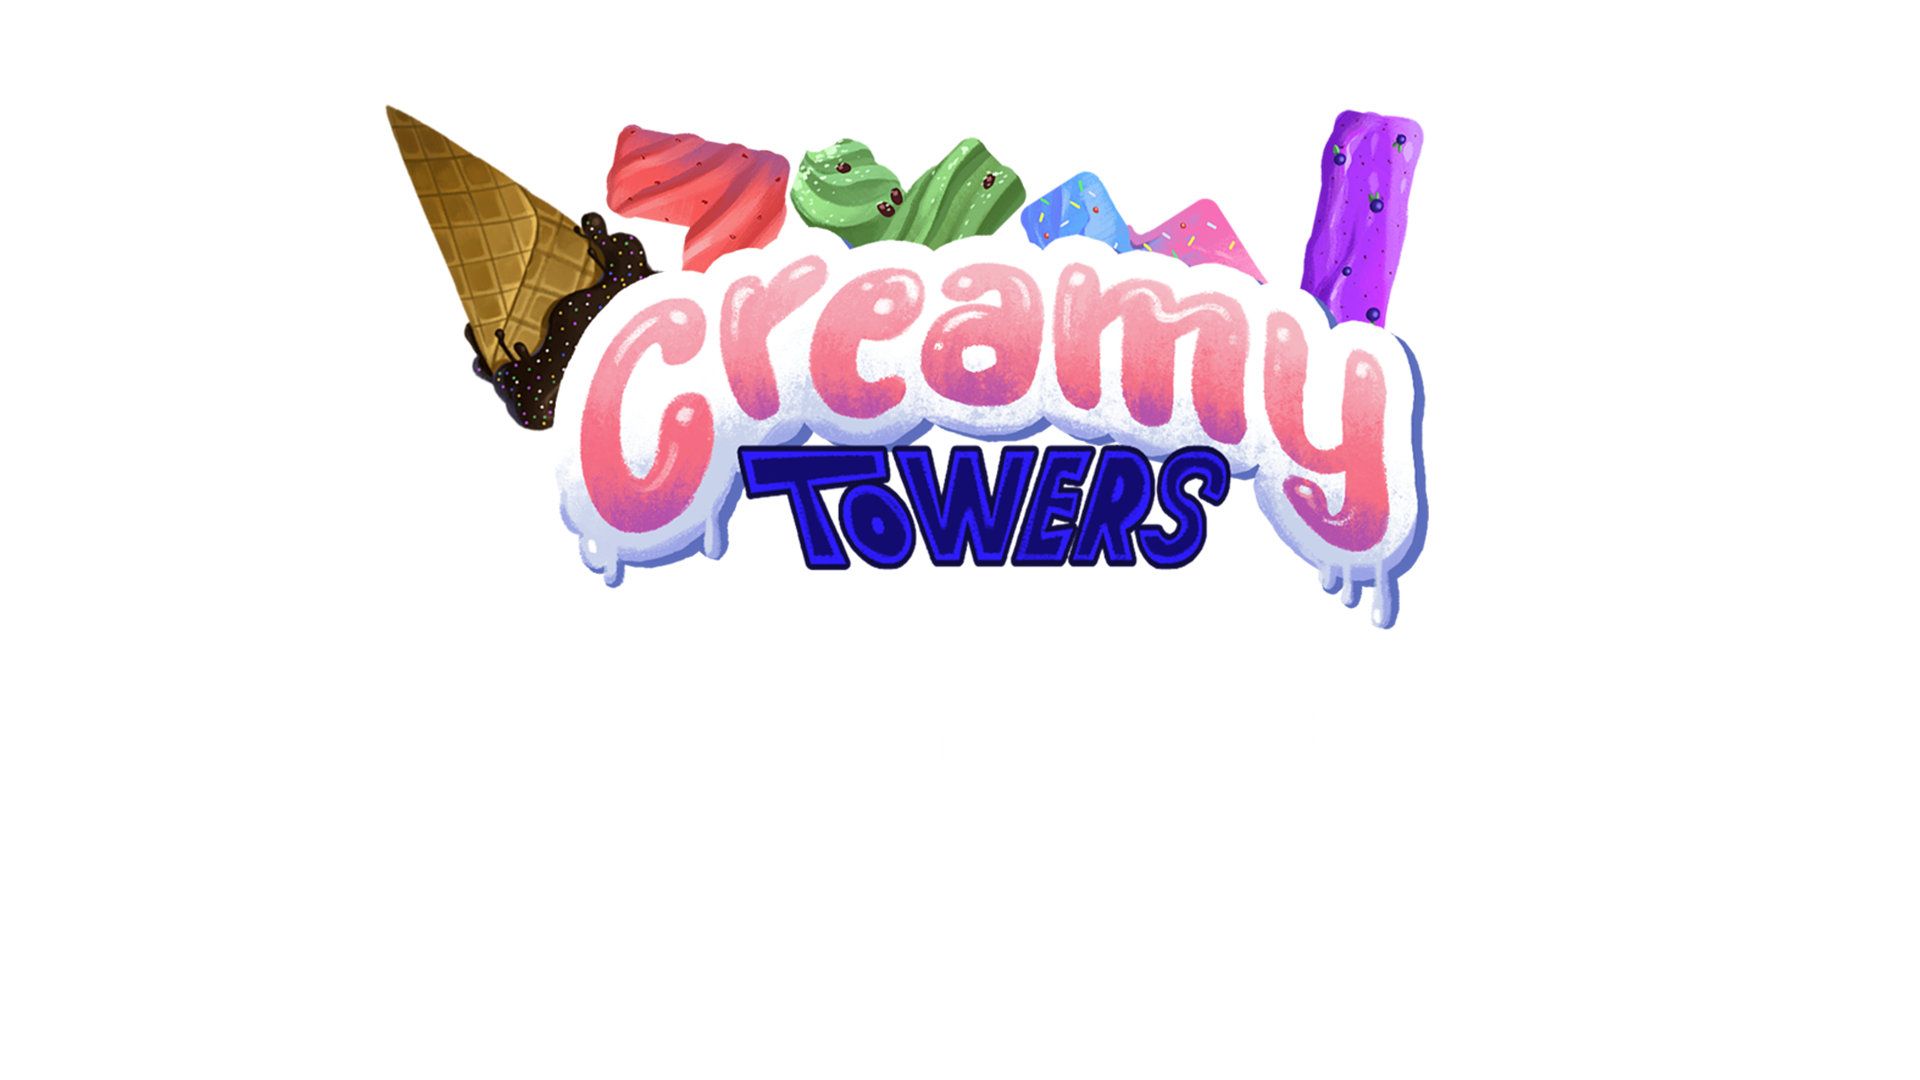 Creamy Towers